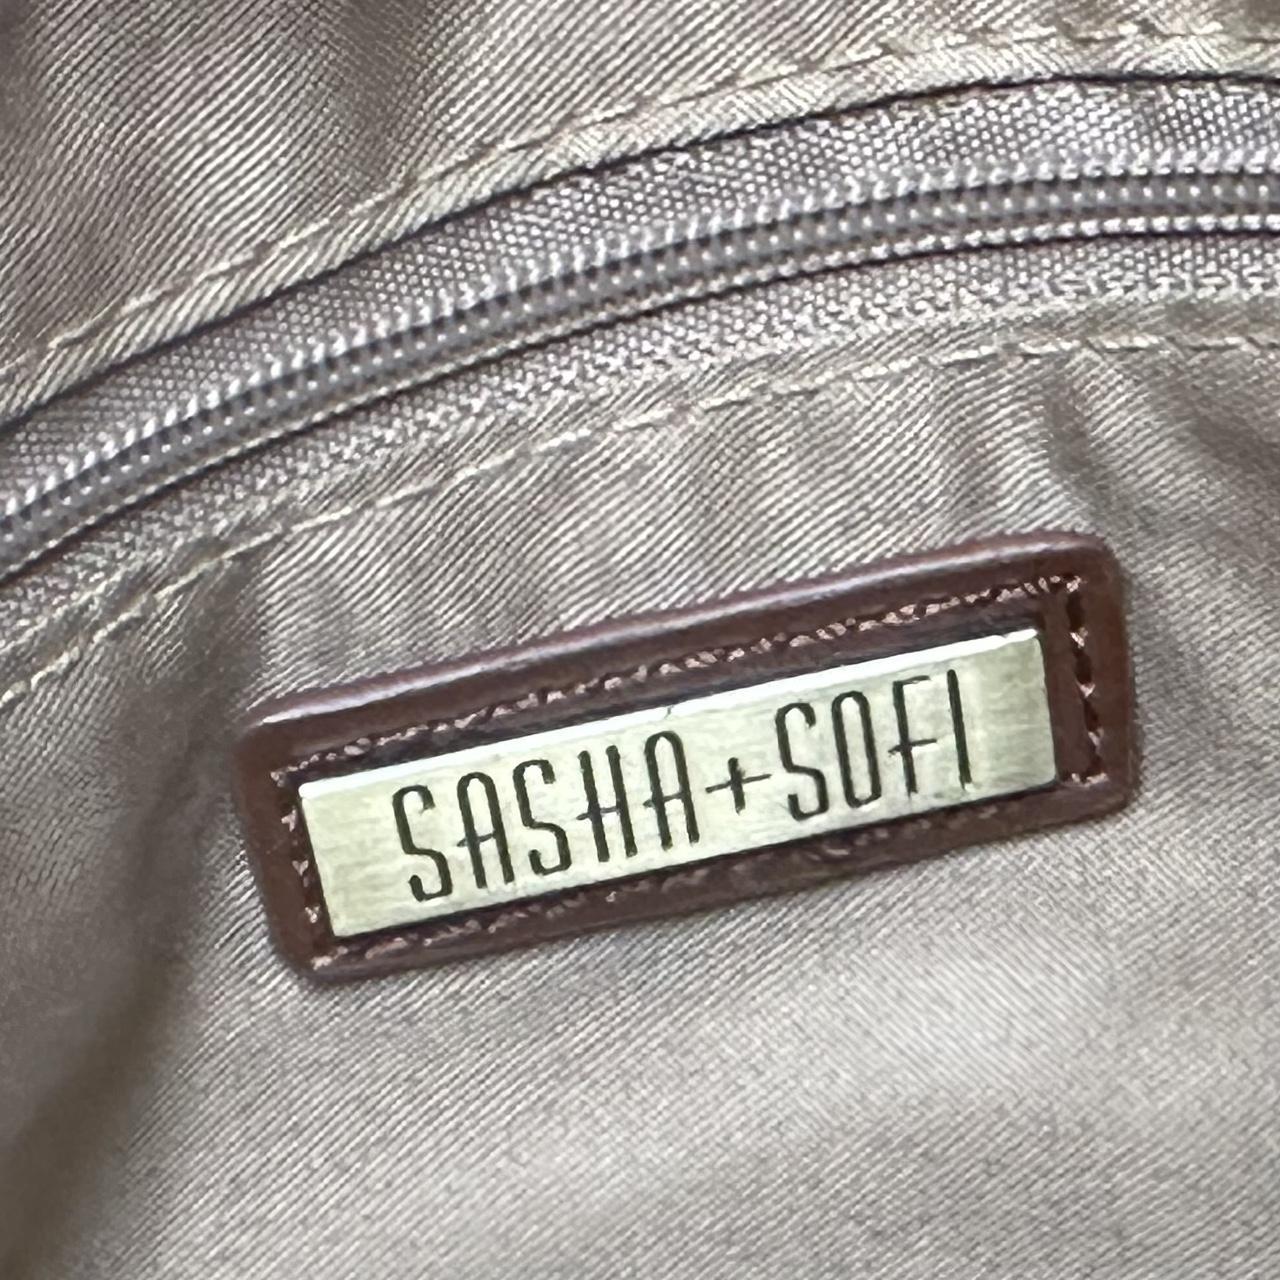 Sasha+Sofi Addison Vegan Leather Tote